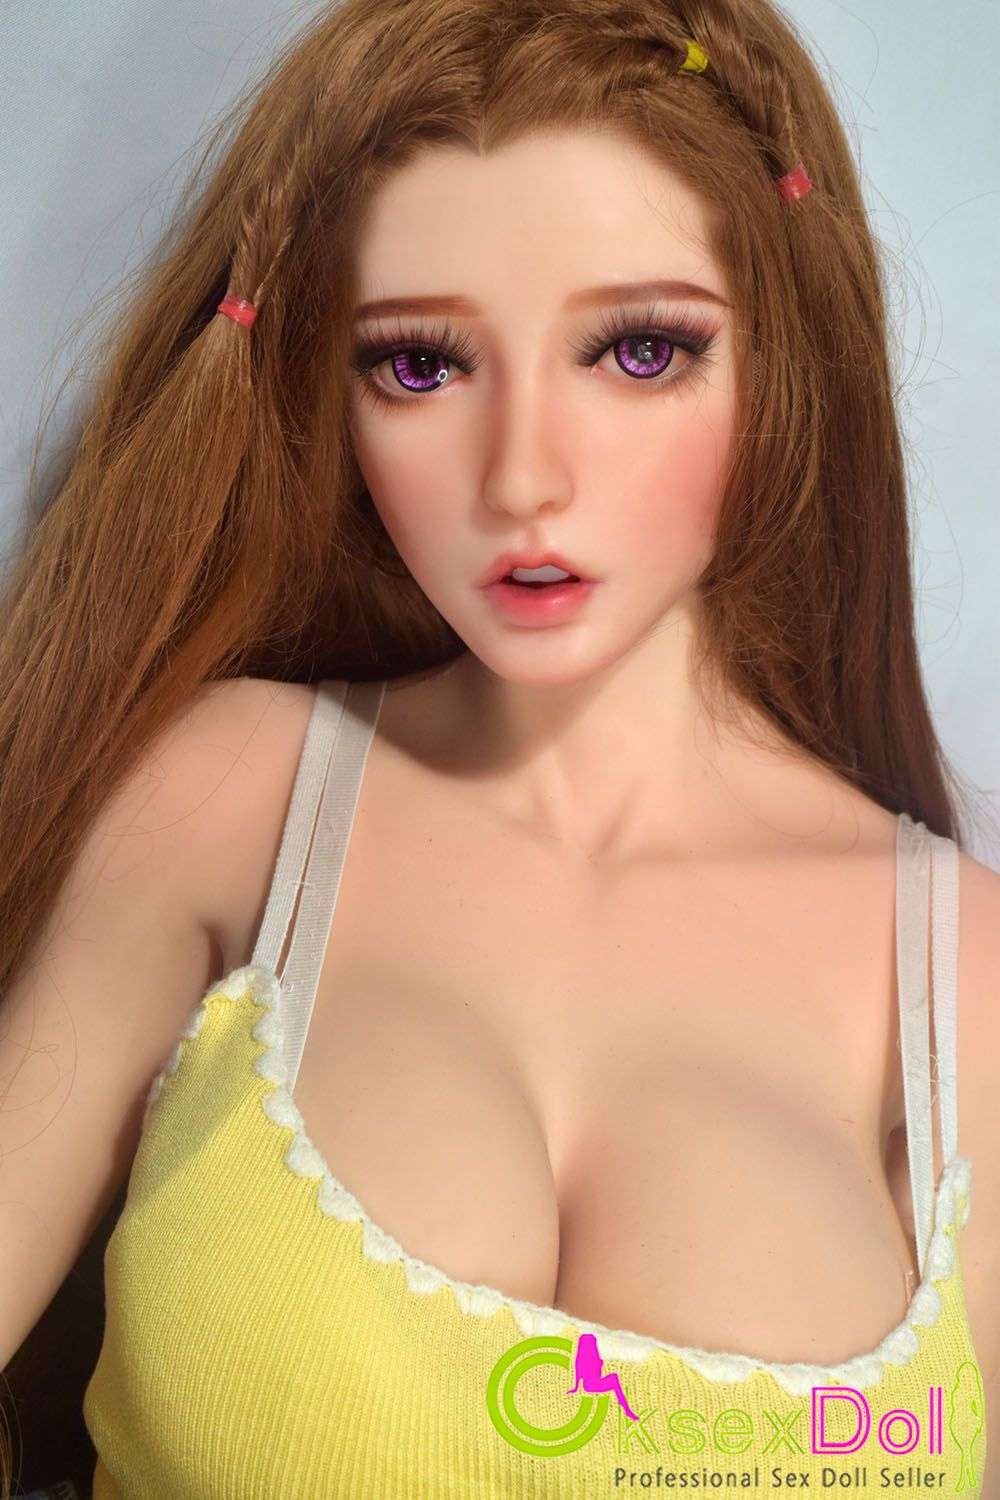 Lifelike Silicone Sex Dolls Pic of Kenzie